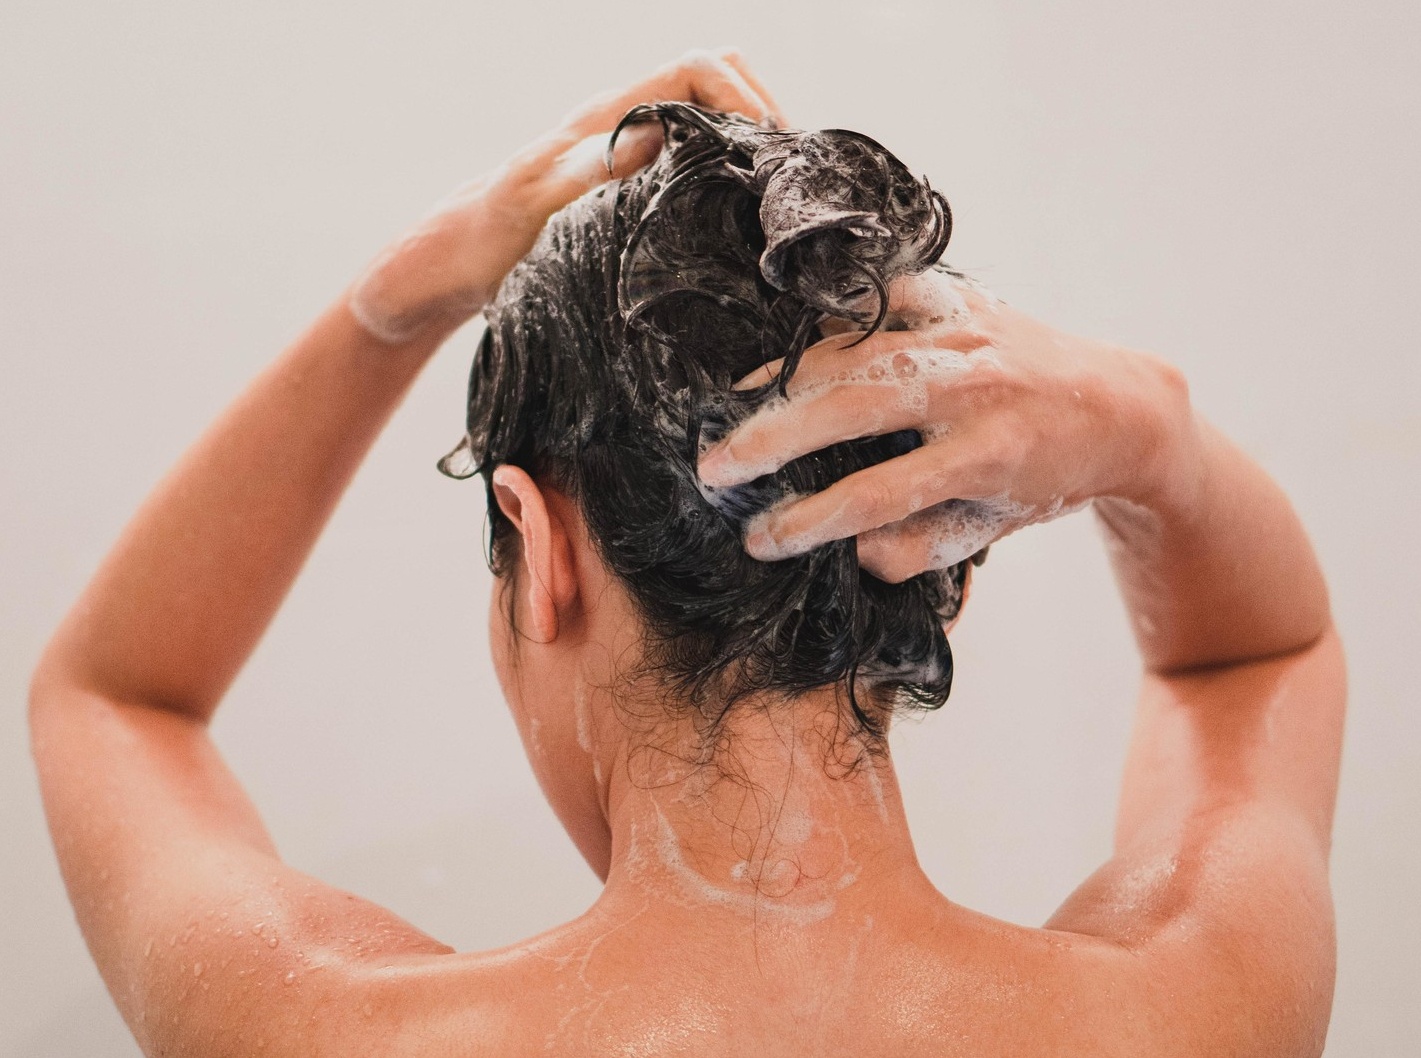 Como lavar el pelo correctamente